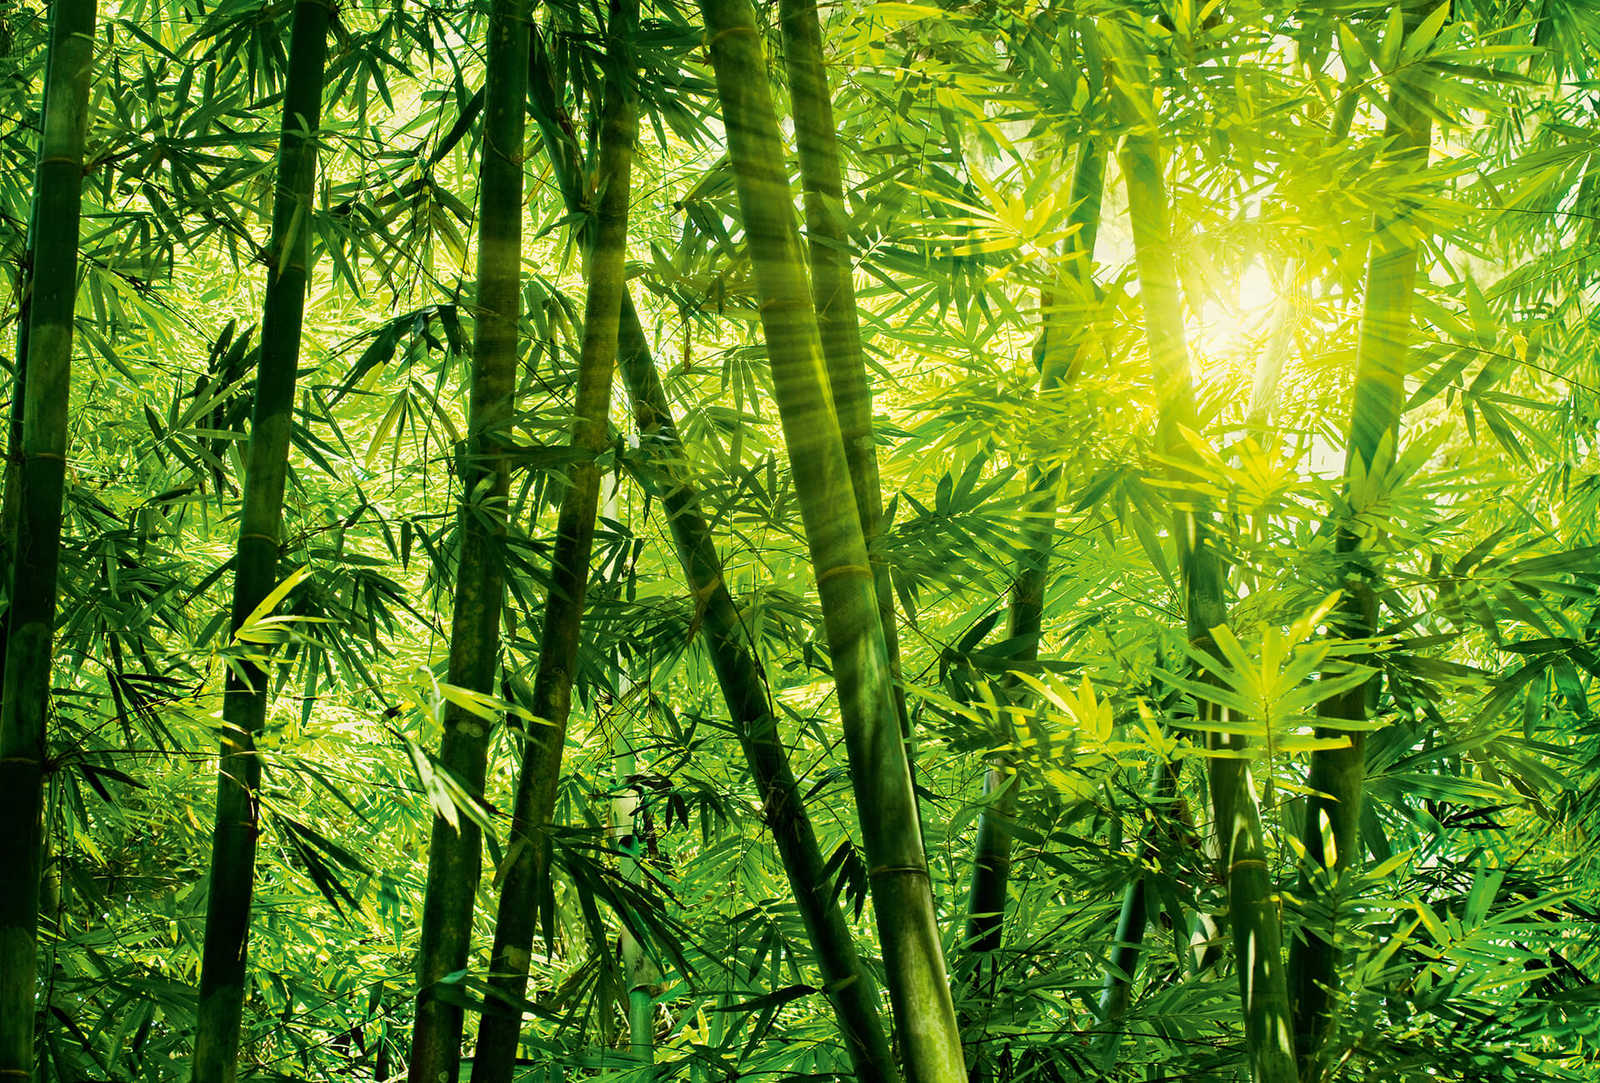         Bamboo forest in sunlight mural
    